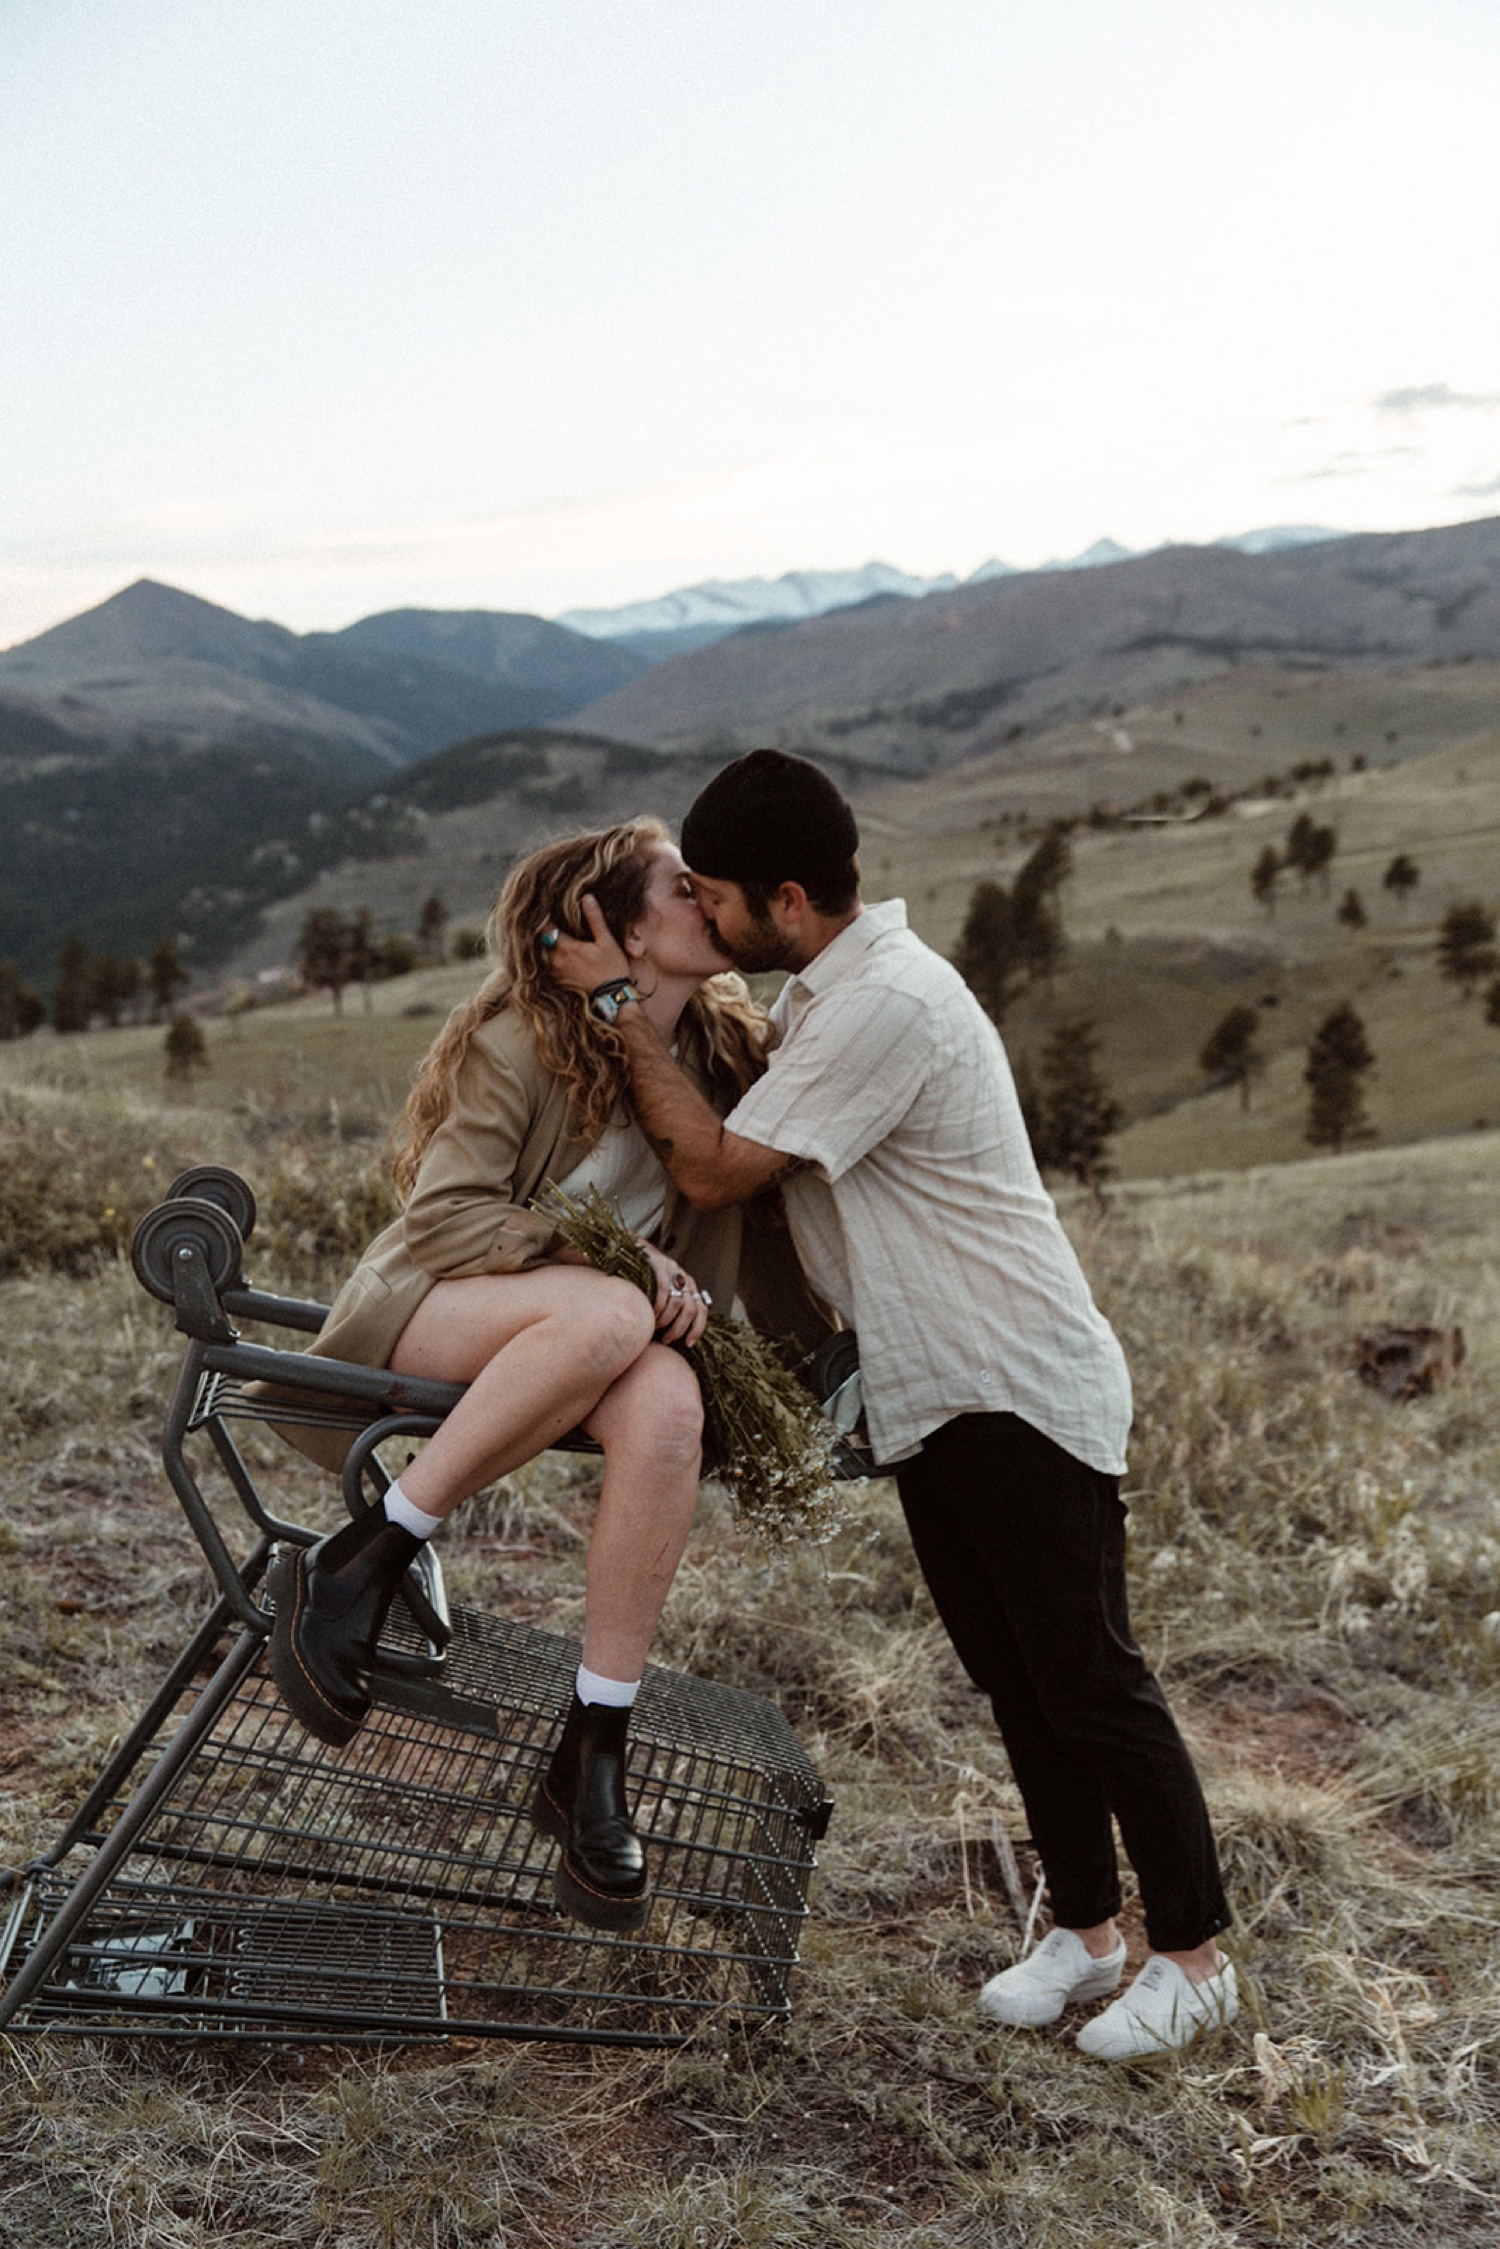 A Big Sur Engagement Photoshoot | Sophia & Theodore | AGS Photo Art